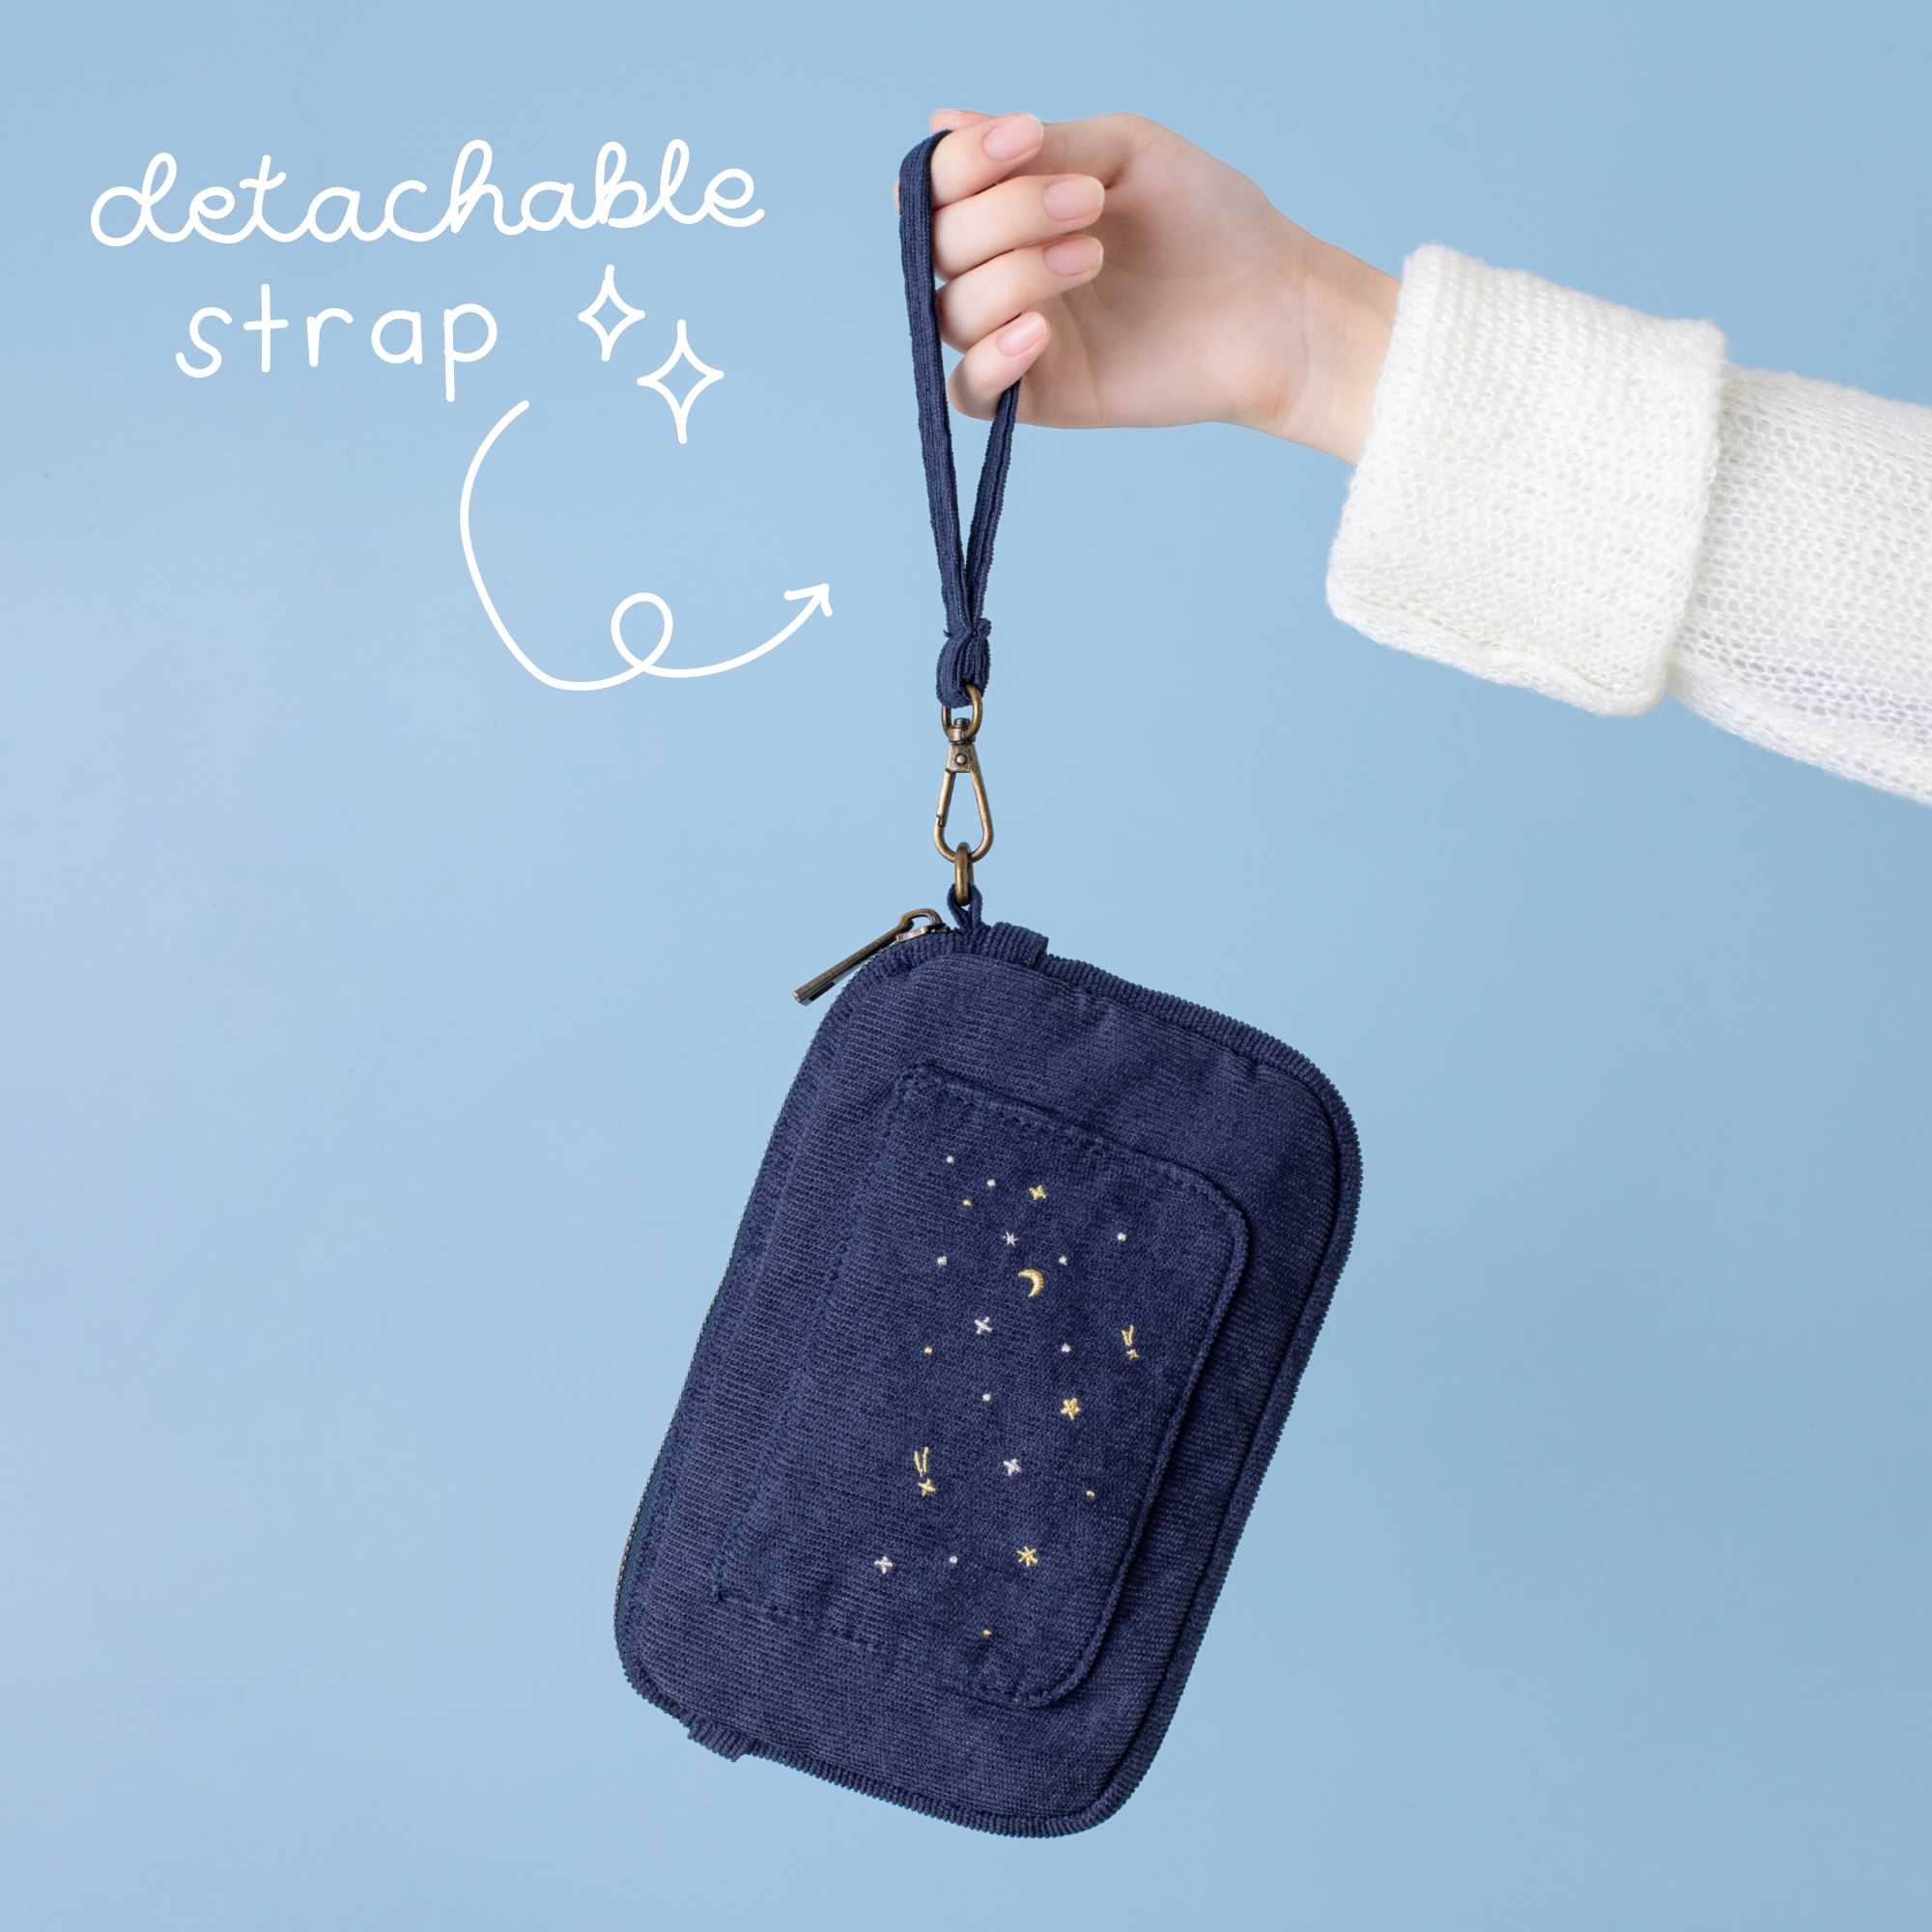 Tsuki ‘Cloud Dreamland’ travel pouch with detachable strap against blue background